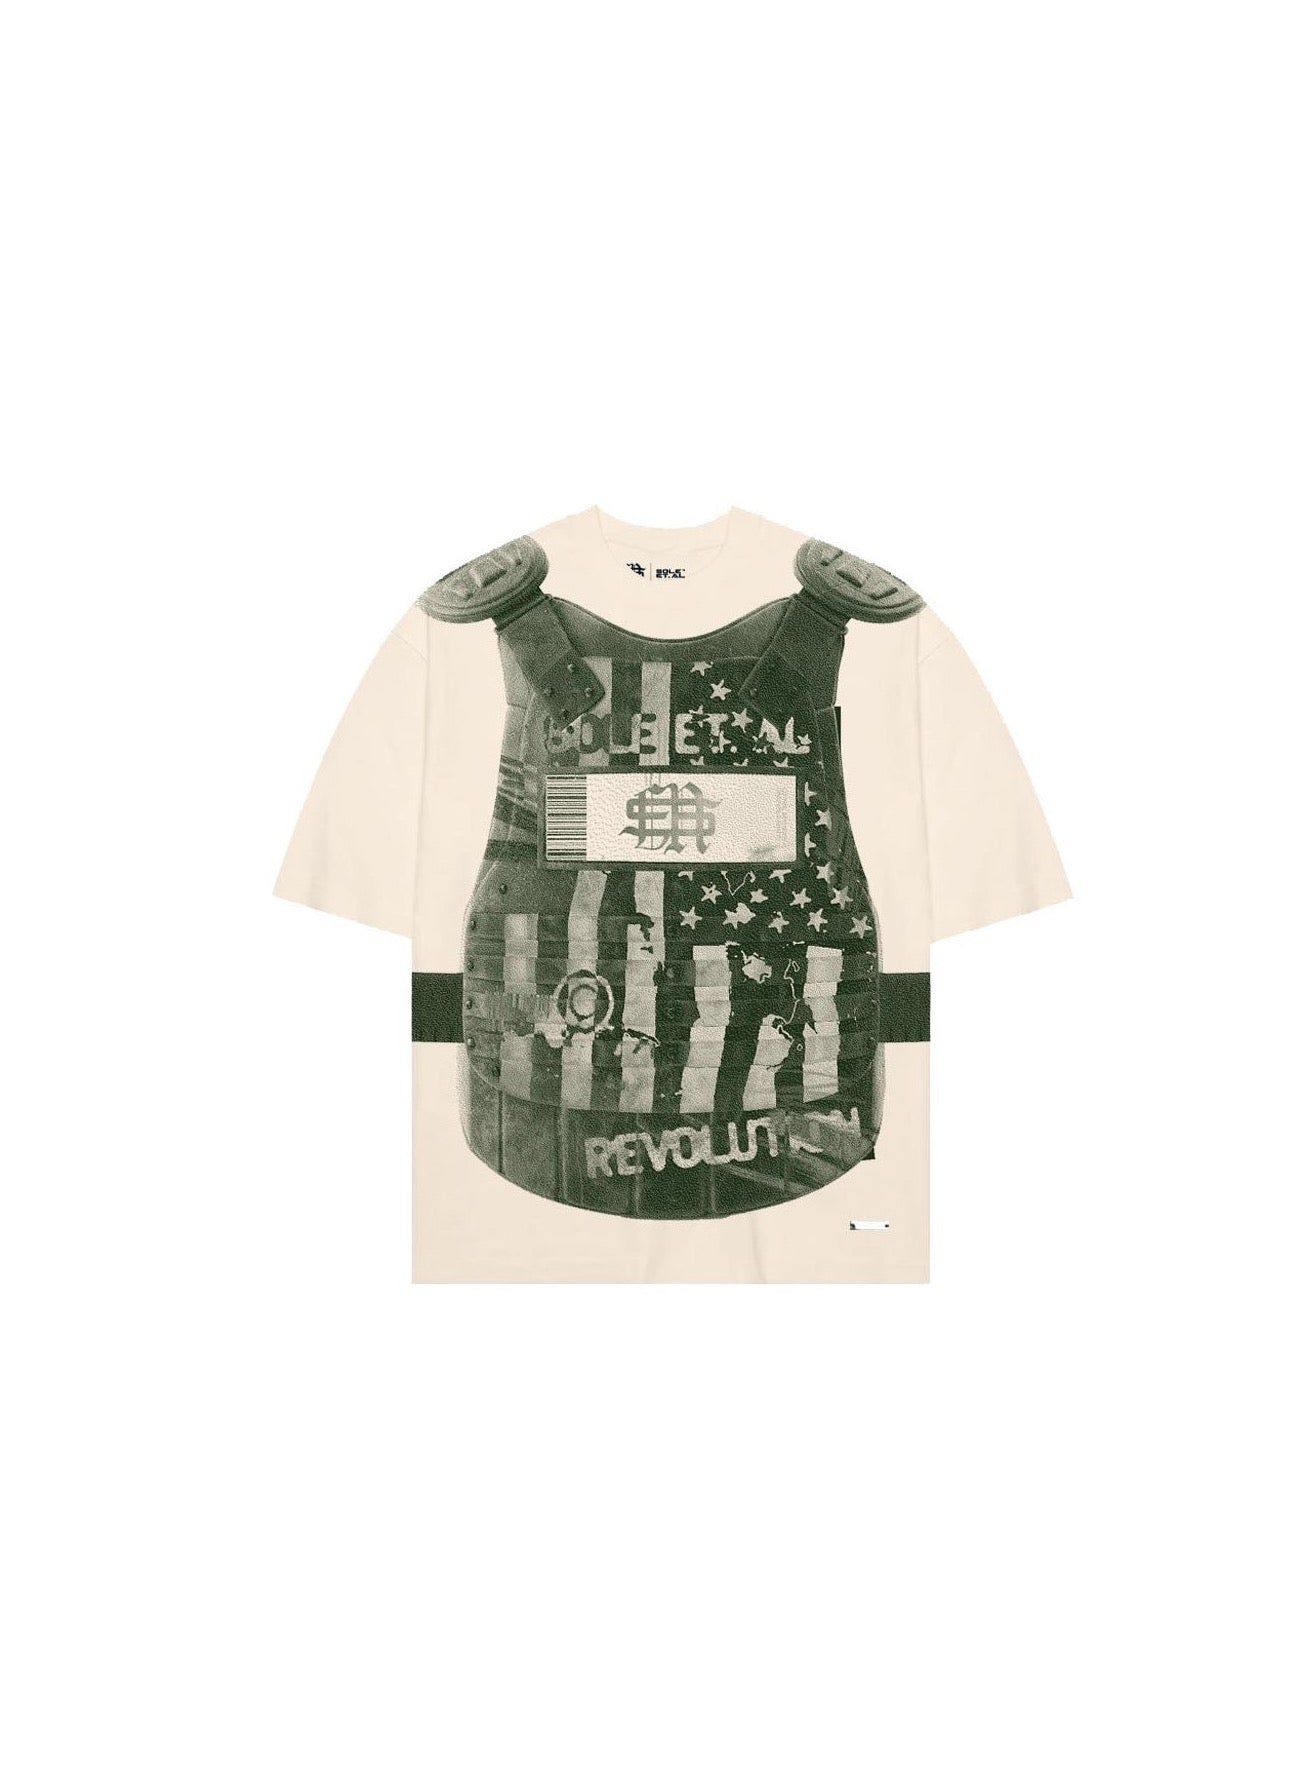 Sole et. Al United Revolutionary T-shirt : Sand / Militärgrön